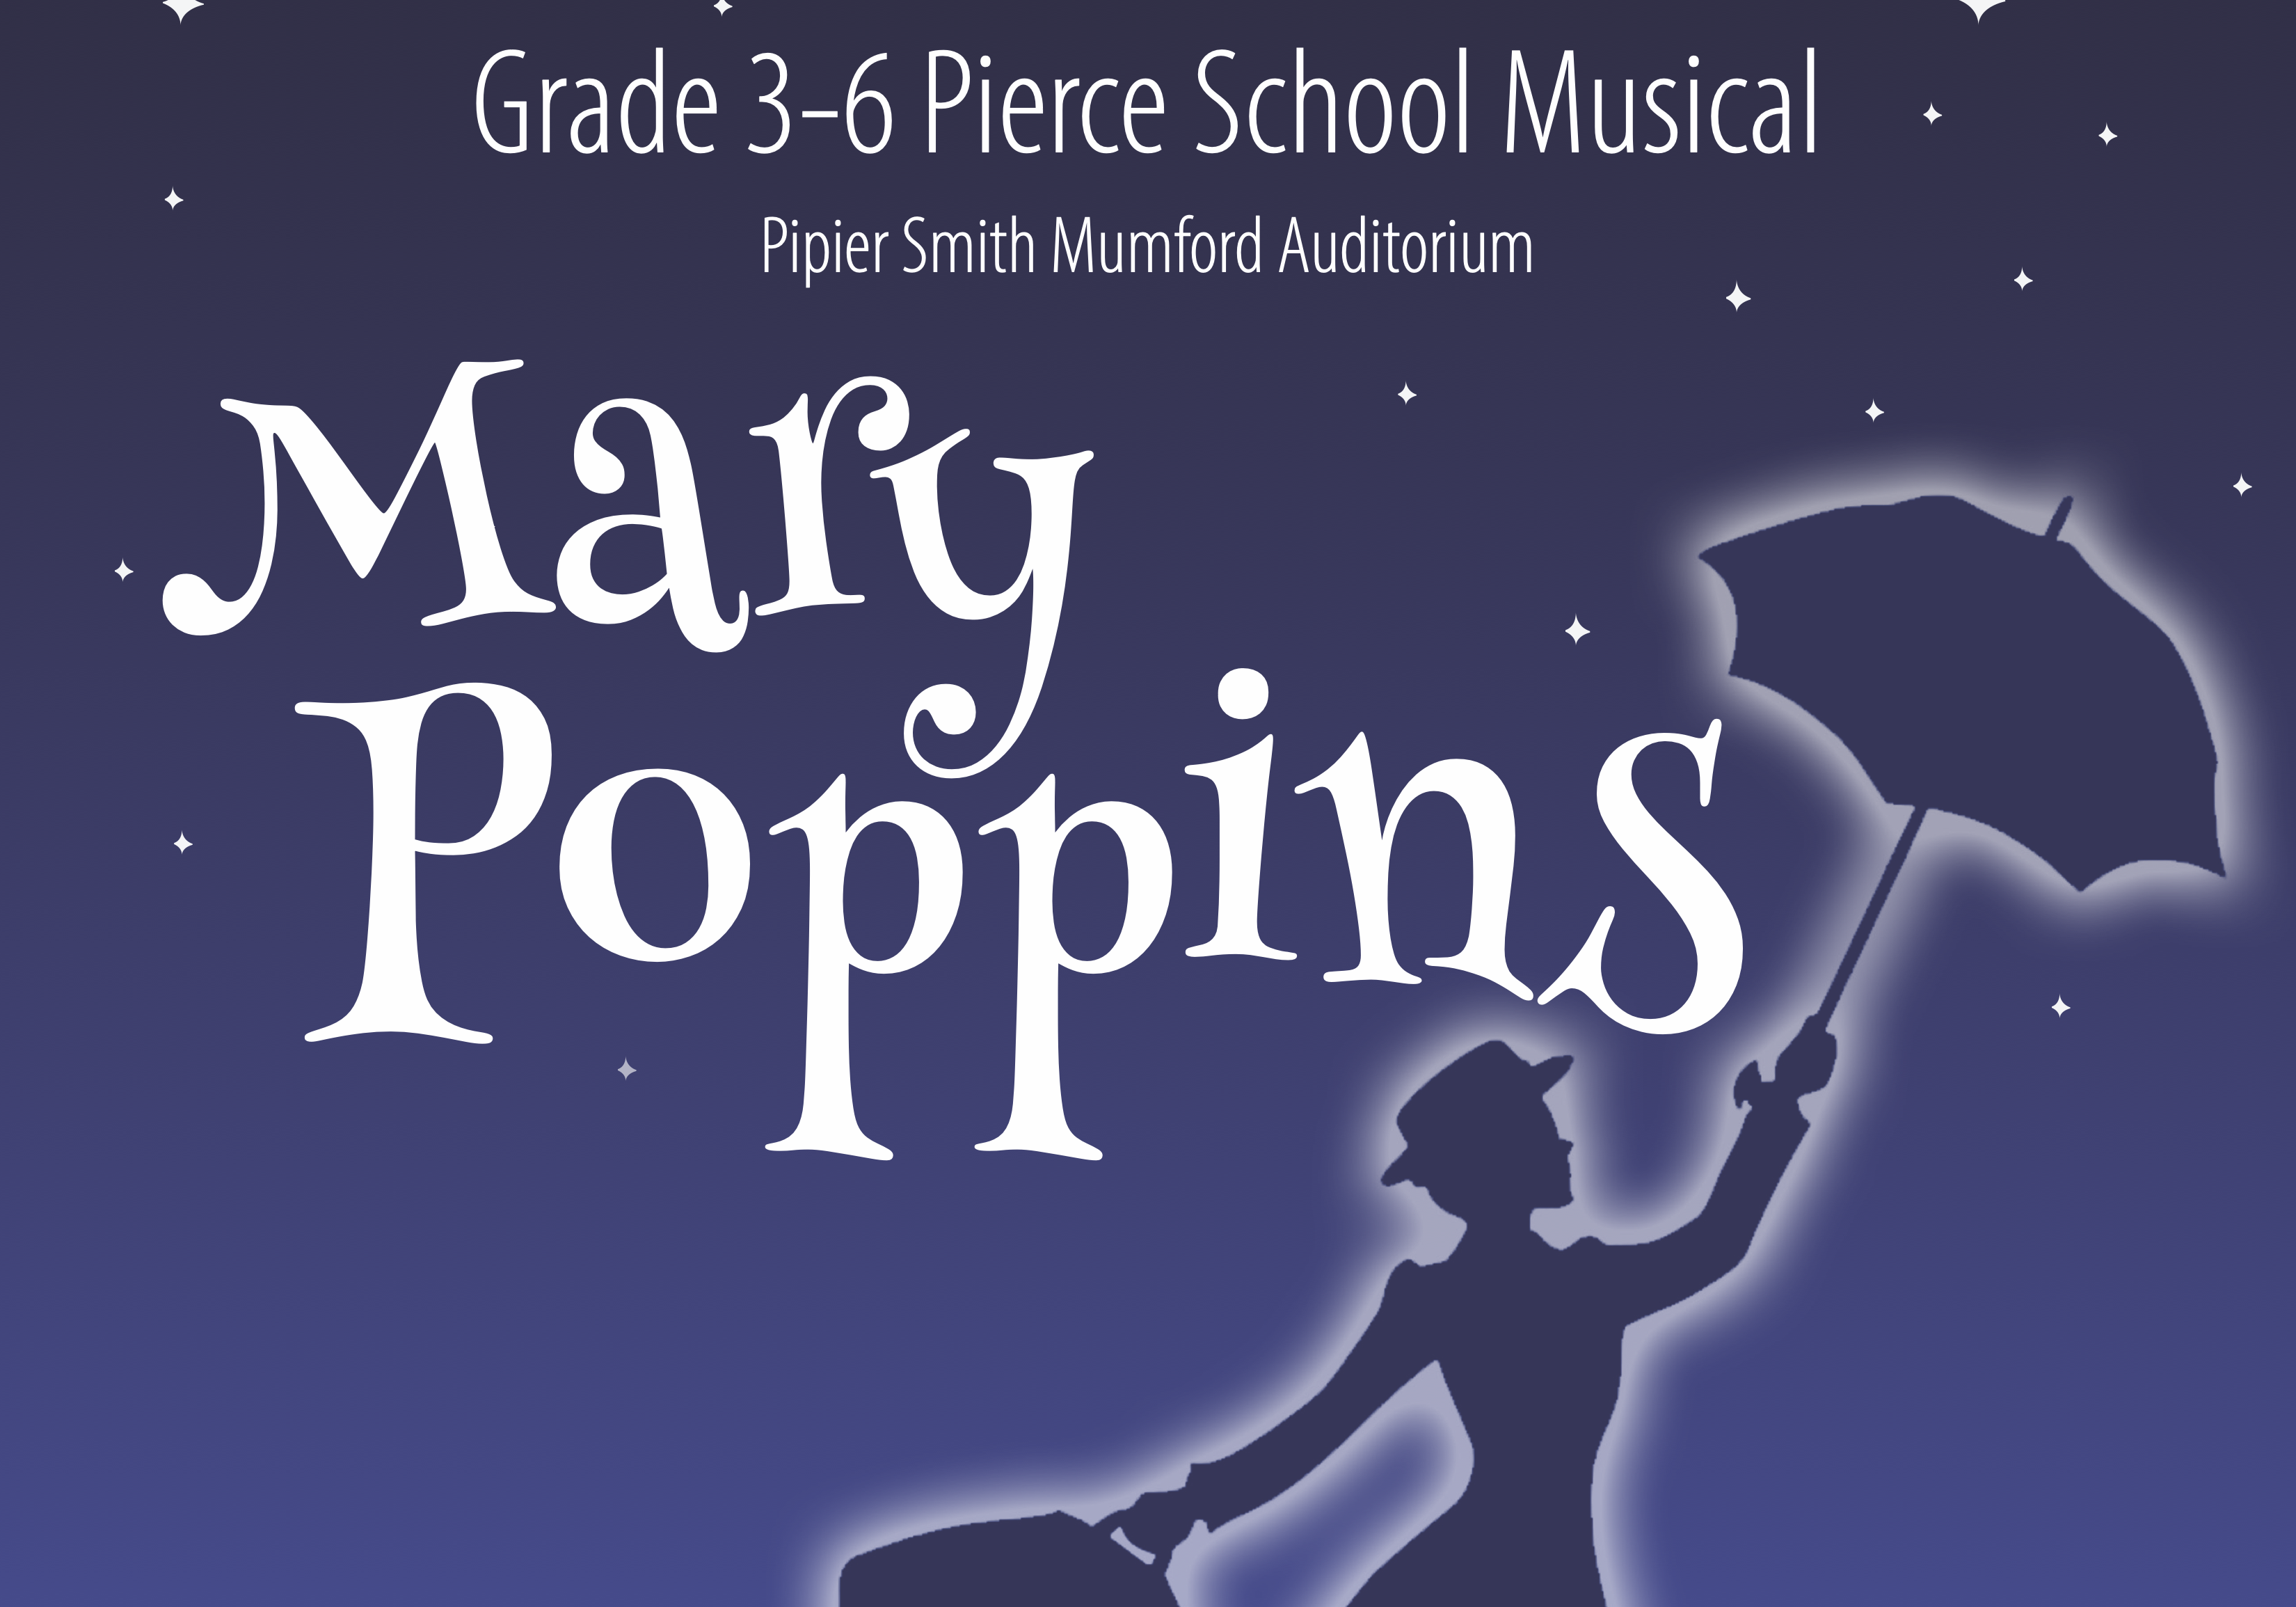 Mary Poppins: The 2023 3rd-6th Grade Pierce School Musical